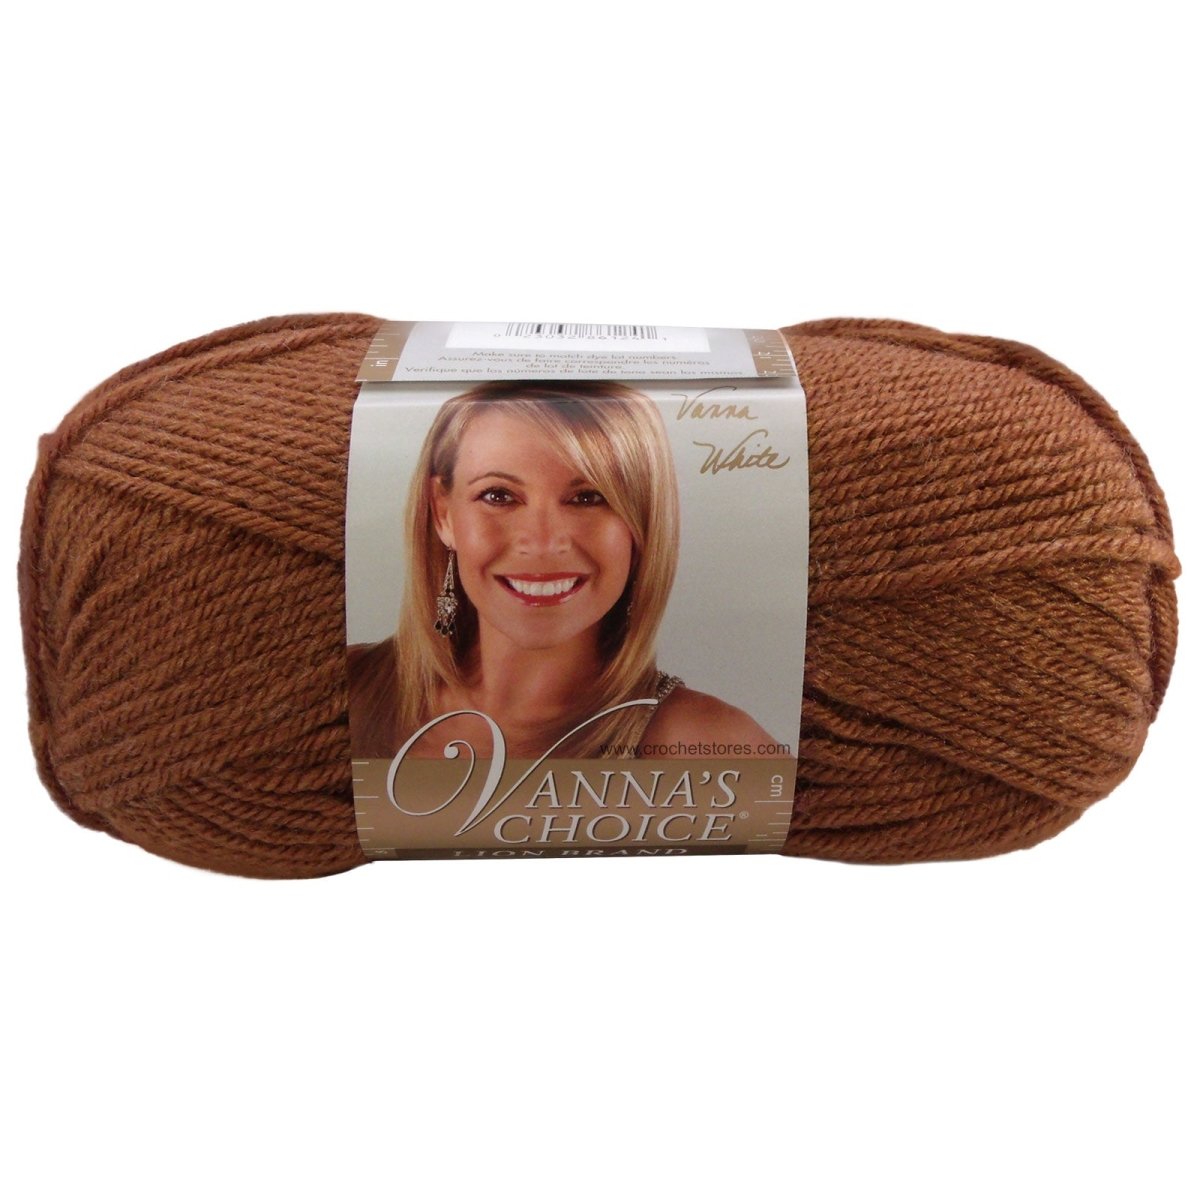 VANNAS CHOICE - Crochetstores860-124